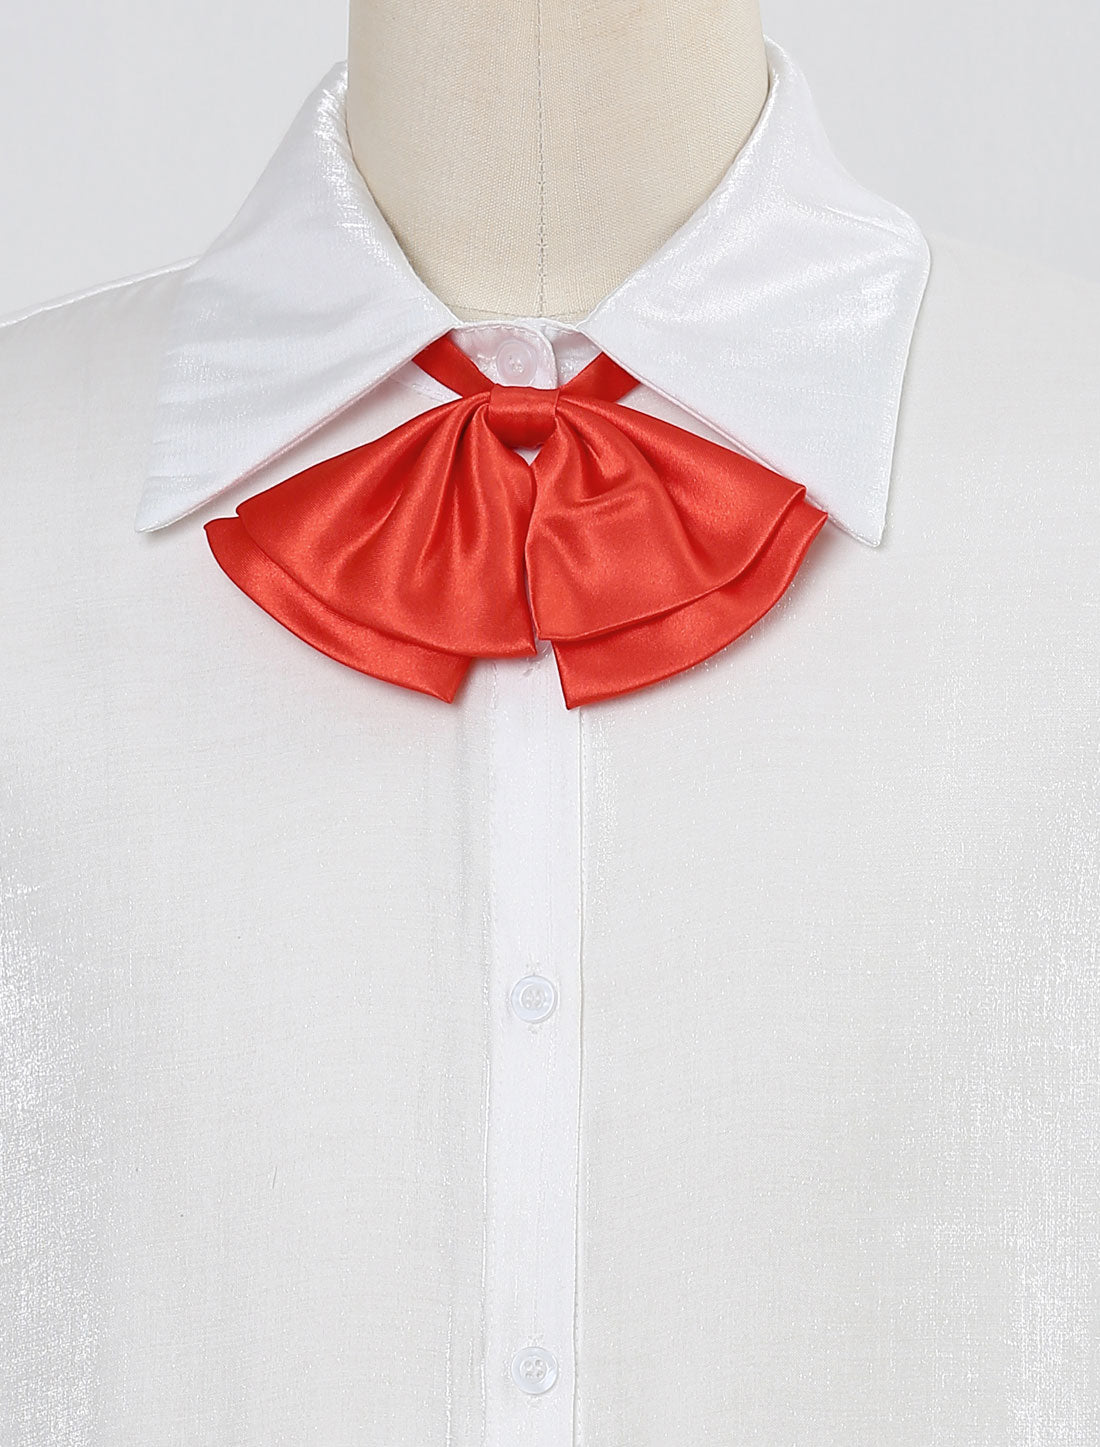 Bublédon Women's Adjustable Pre-Tied Blouse Neck Ties Uniform Shirt Bowknot Neckwear with Storage Bag